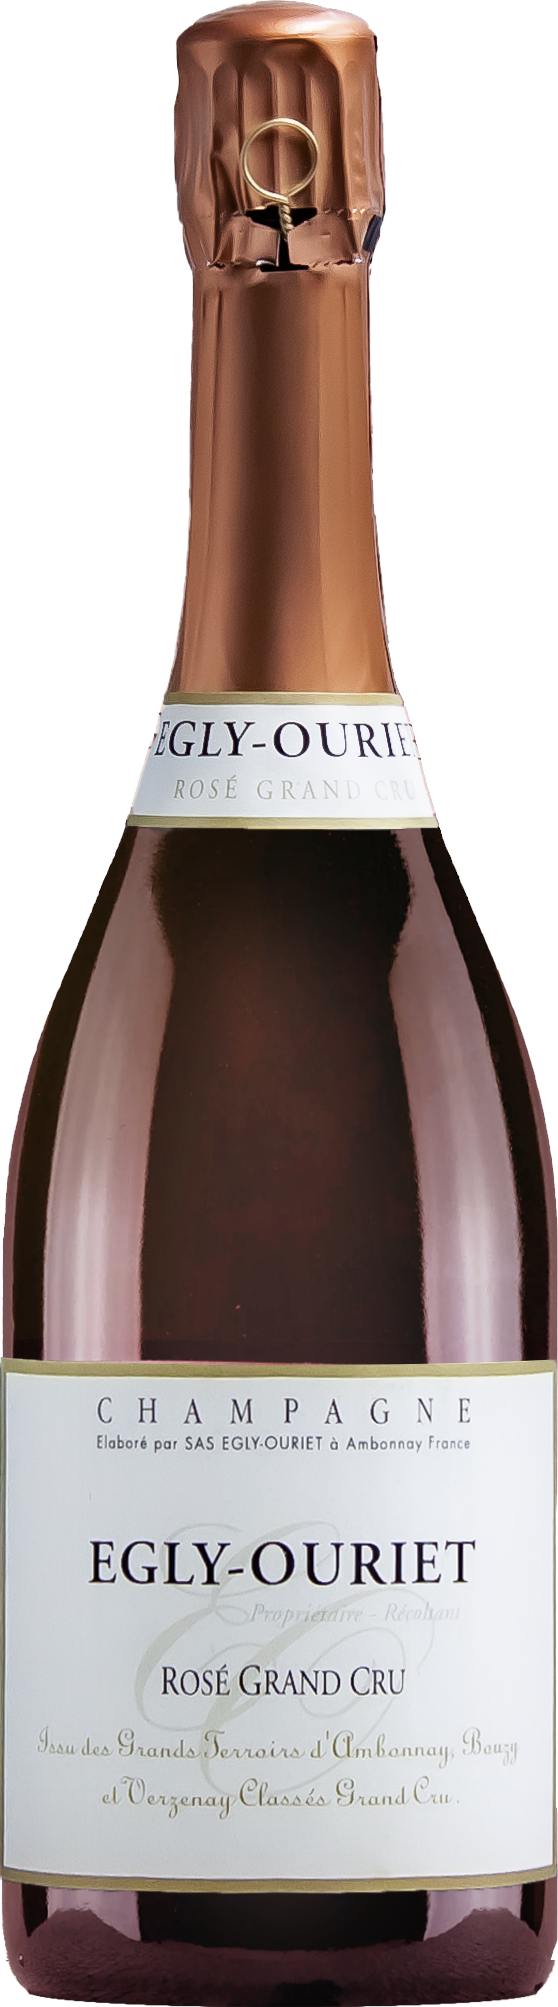 Champagne Egly-Ouriet Grand Cru Brut Rosé NV Disg. May 2016